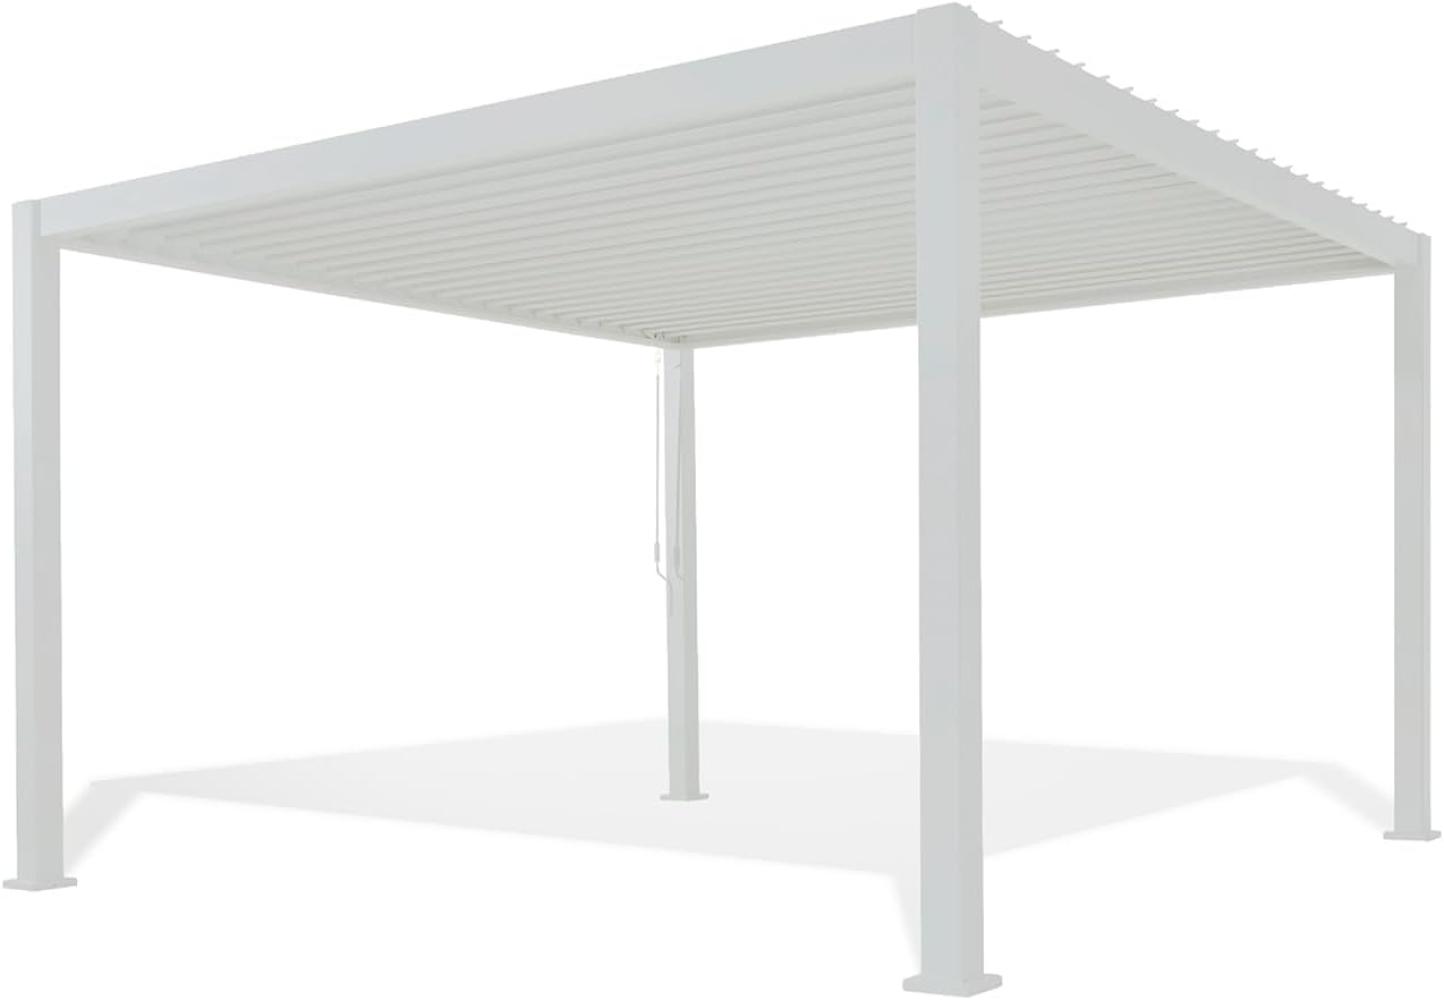 Weide Classic | Aluminium Pavillon | 3 x 3 M | Lamellendach weiß | Pergola freistehend Bild 1